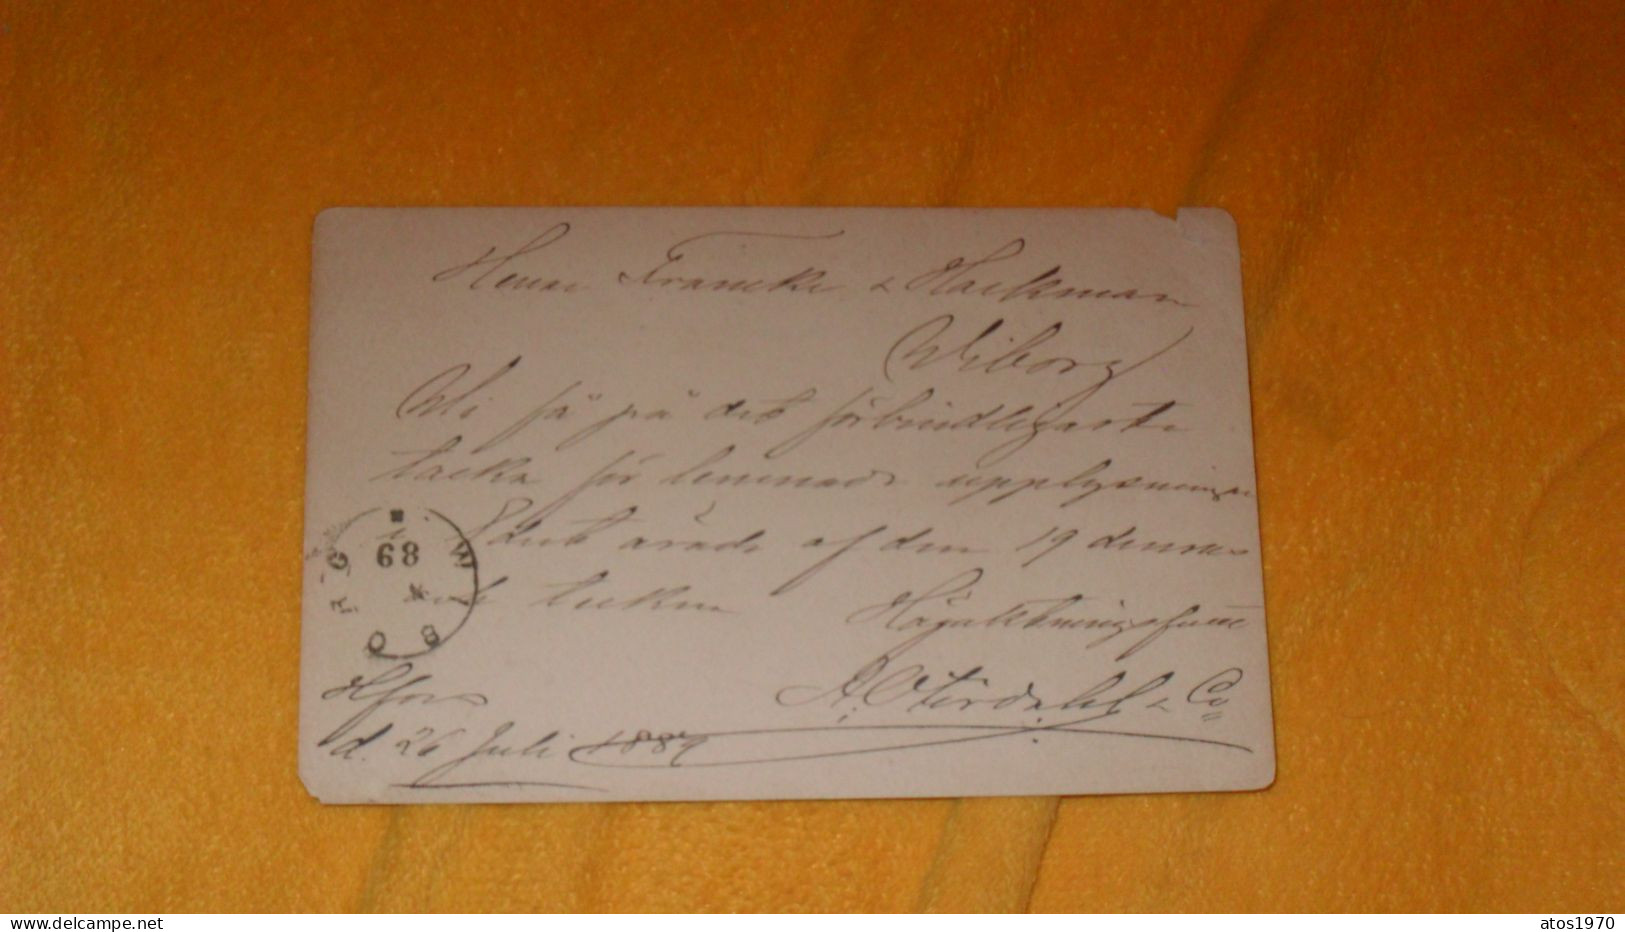 CARTE POSTALE ANCIENNE DE 1889../ FINLANDE A. OTERDAHL & Co..BYGGNADSMATERIALIER HELSINGFORS HELSINHKI..CACHET + TIMBRE - Lettres & Documents